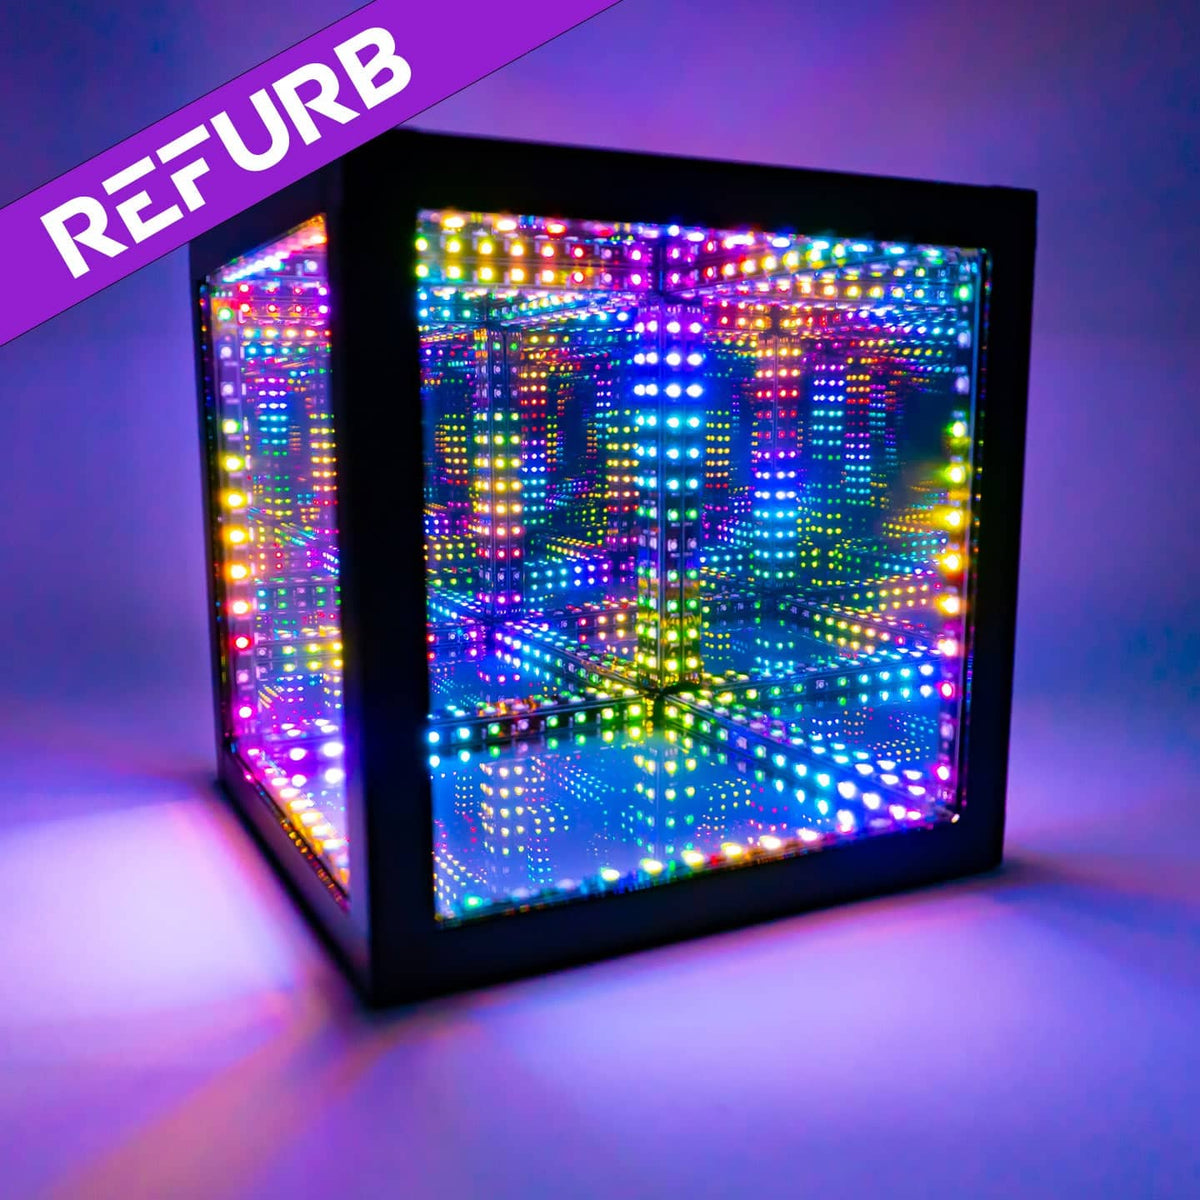 HyperCube10 Refurb